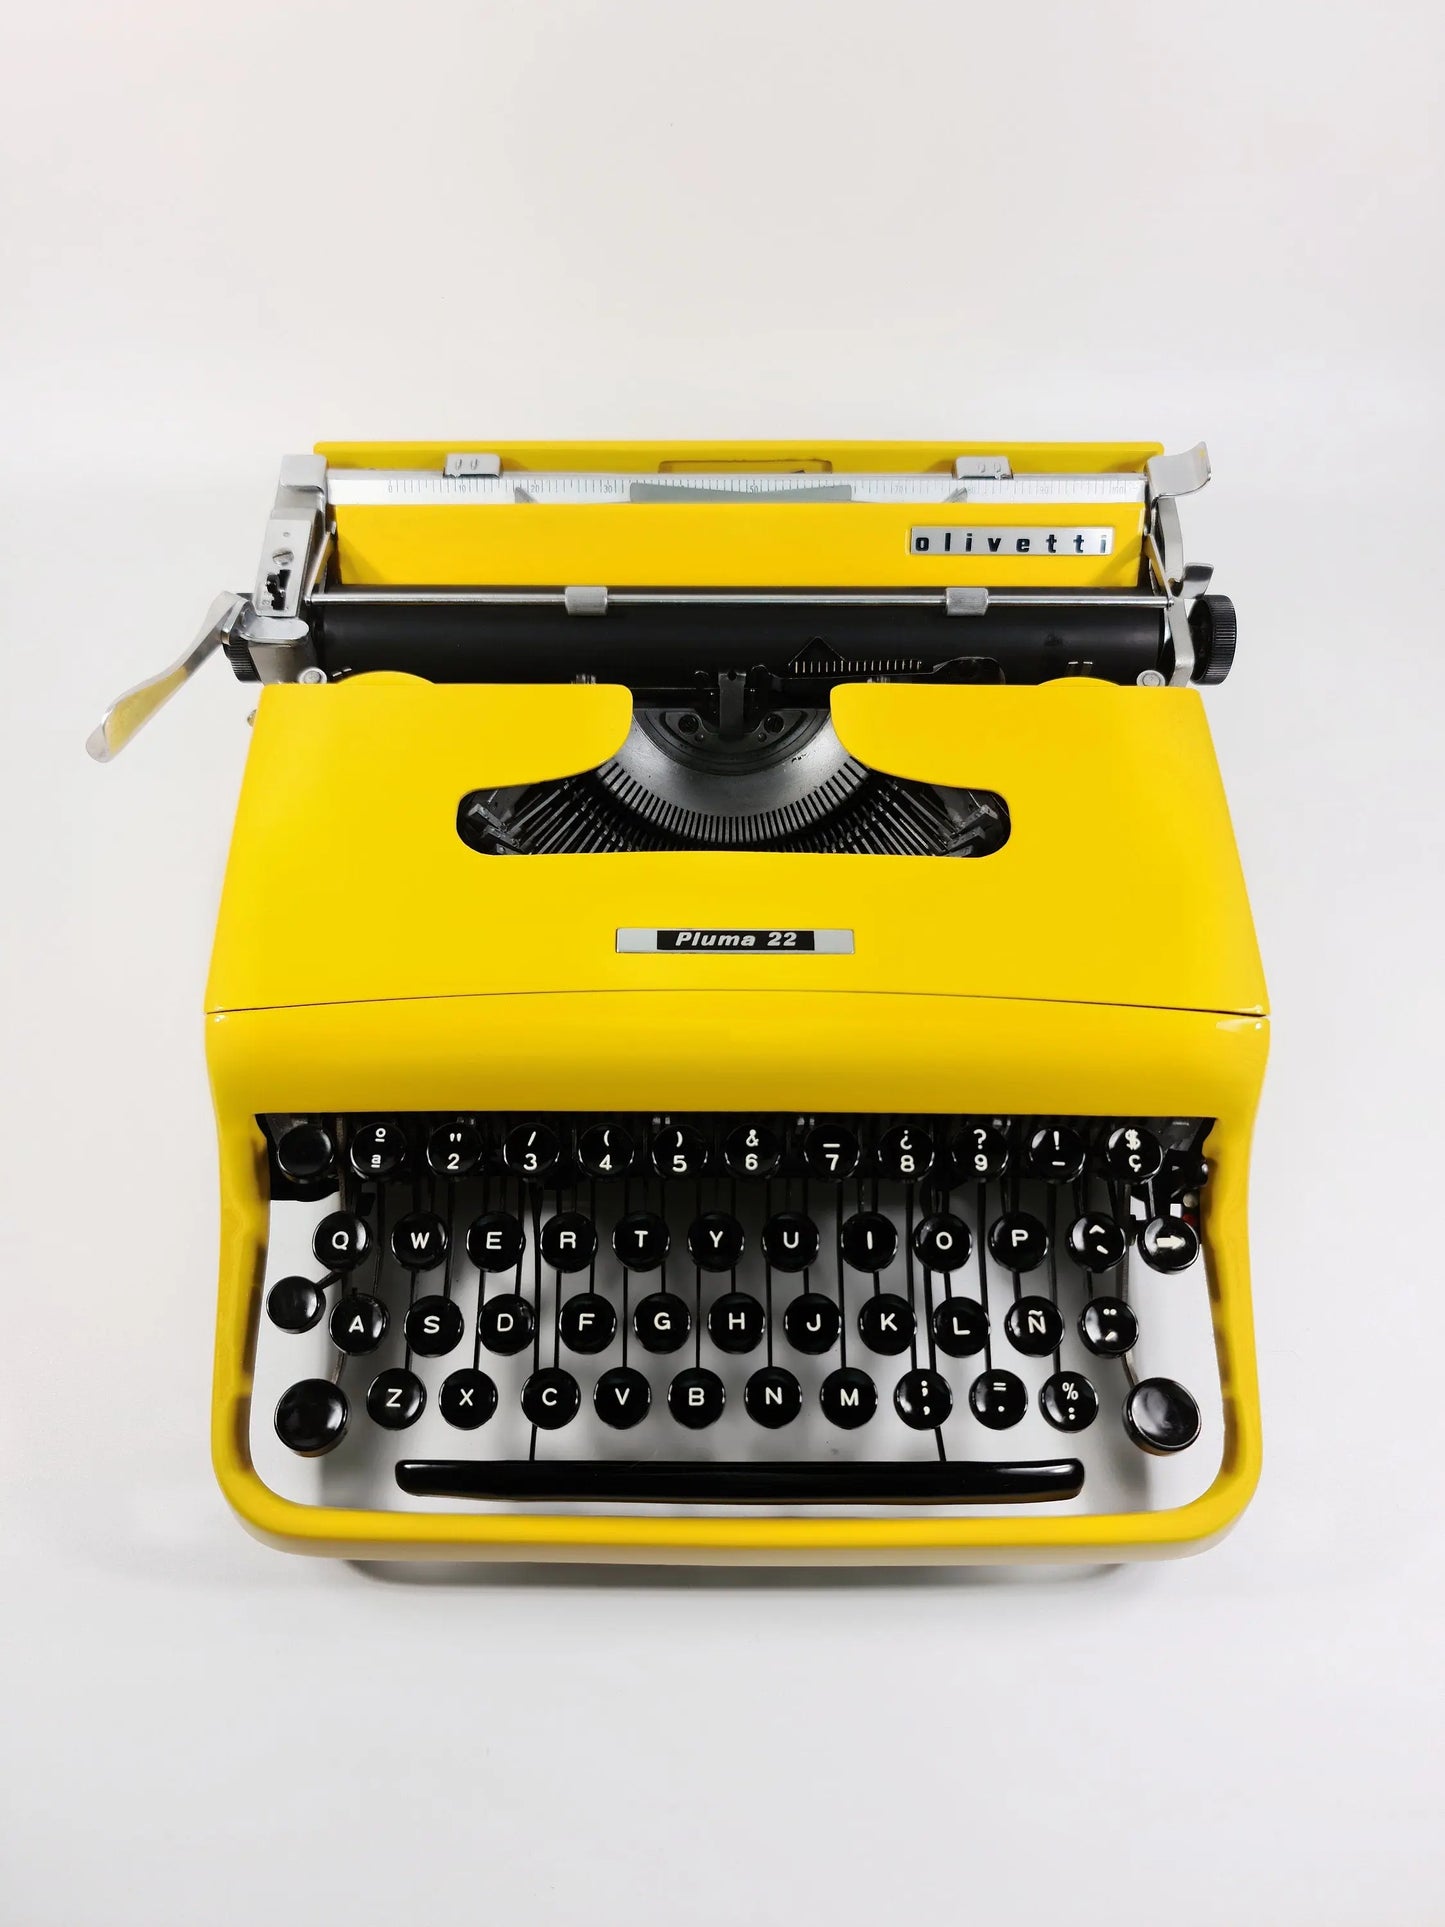 SALE! - Limited Edition Olivetti Pluma 22 Yellow Typewriter, Vintage, Mint Condition, Professionally Serviced - ElGranero Typewriter.Company